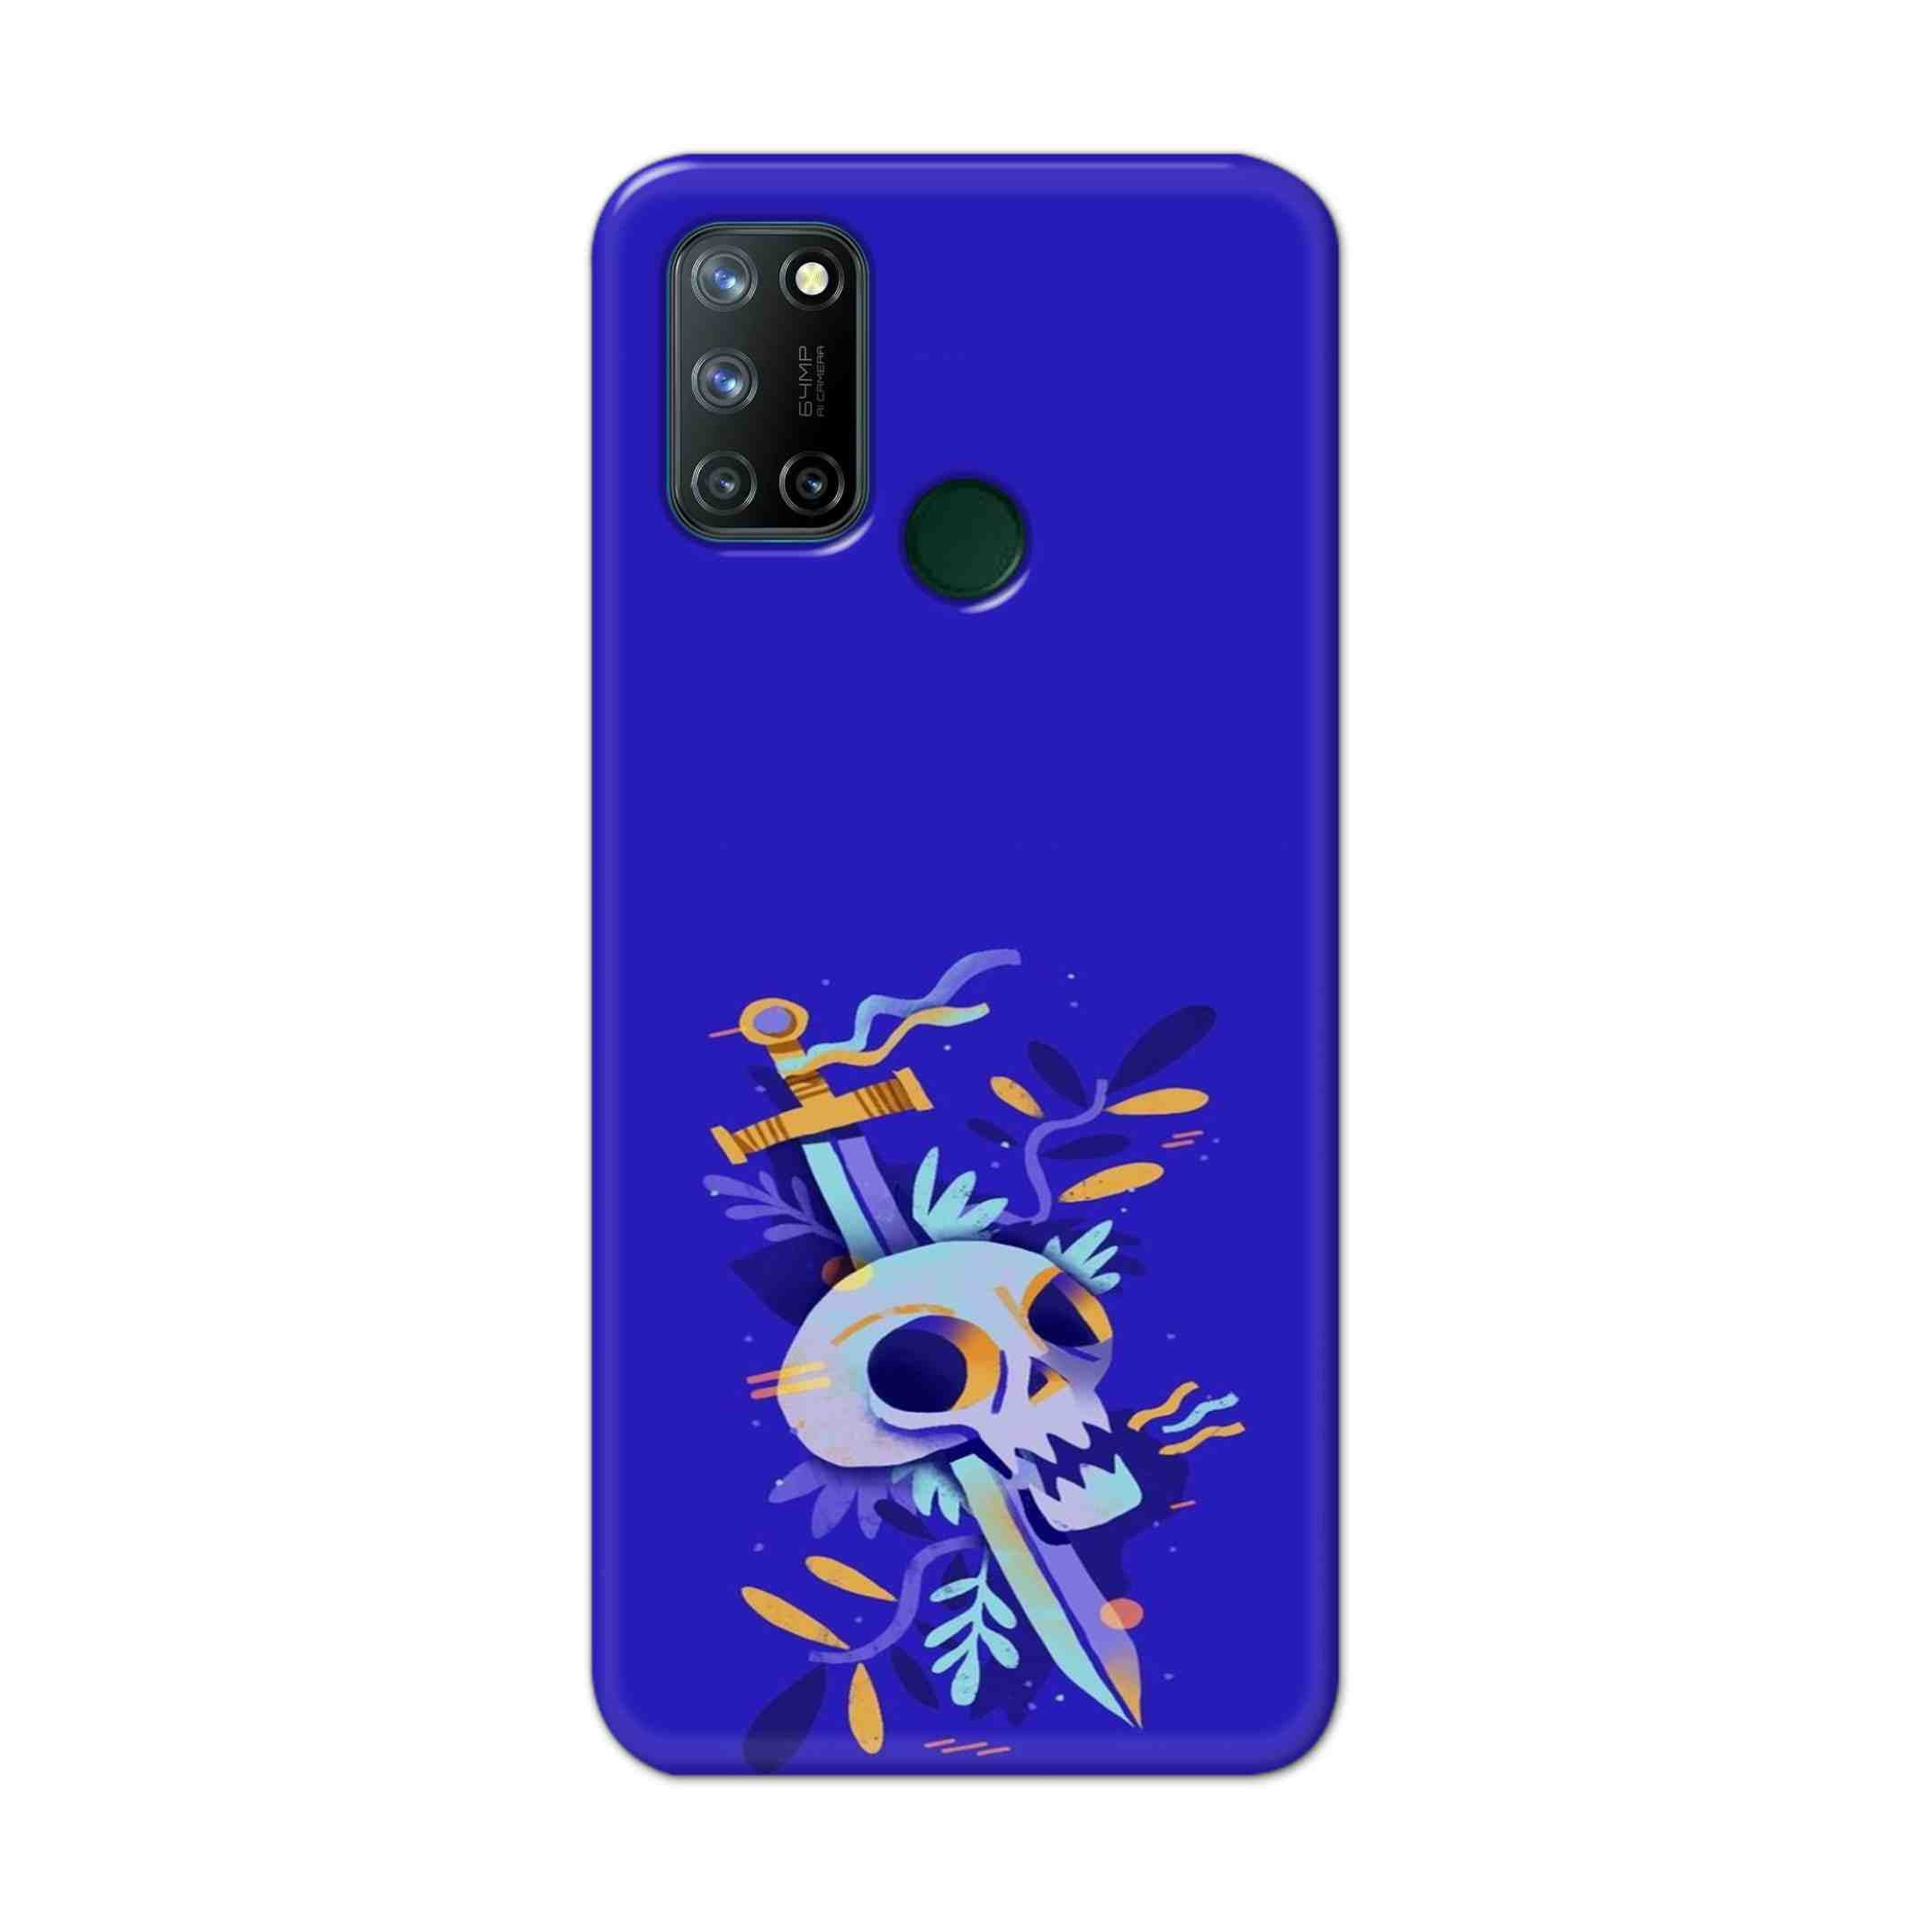 Buy Blue Skull Hard Back Mobile Phone Case Cover For Realme 7i Online